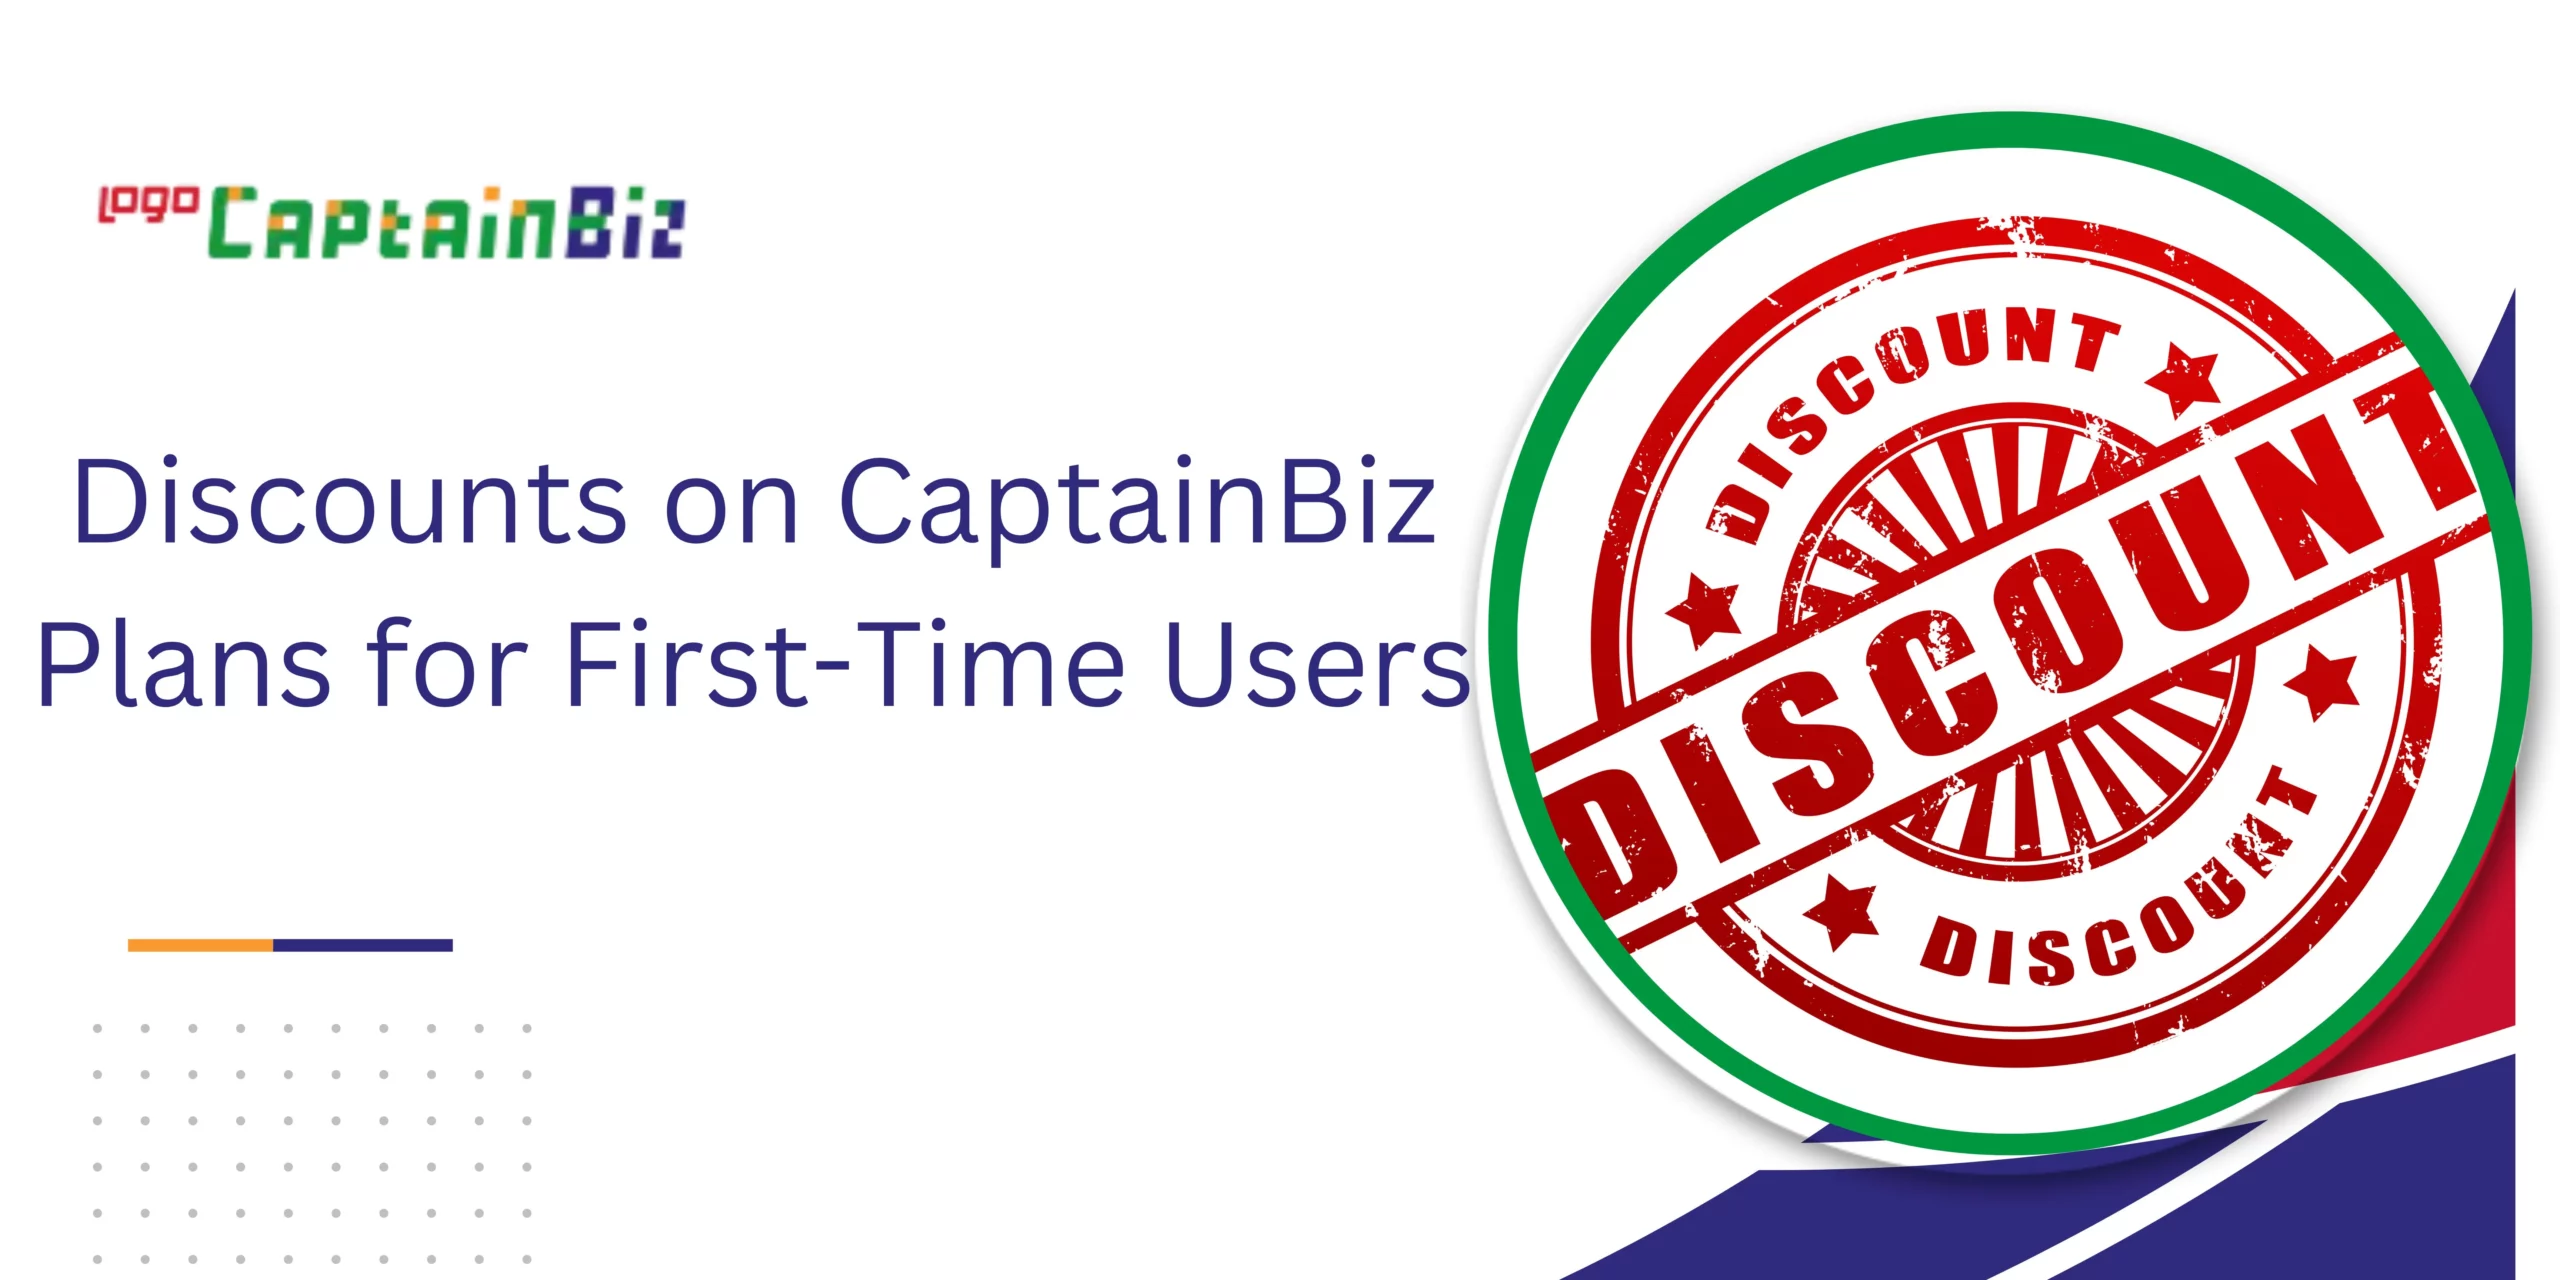 CaptainBiz: Discounts on CaptainBiz Plans for First-Time Users